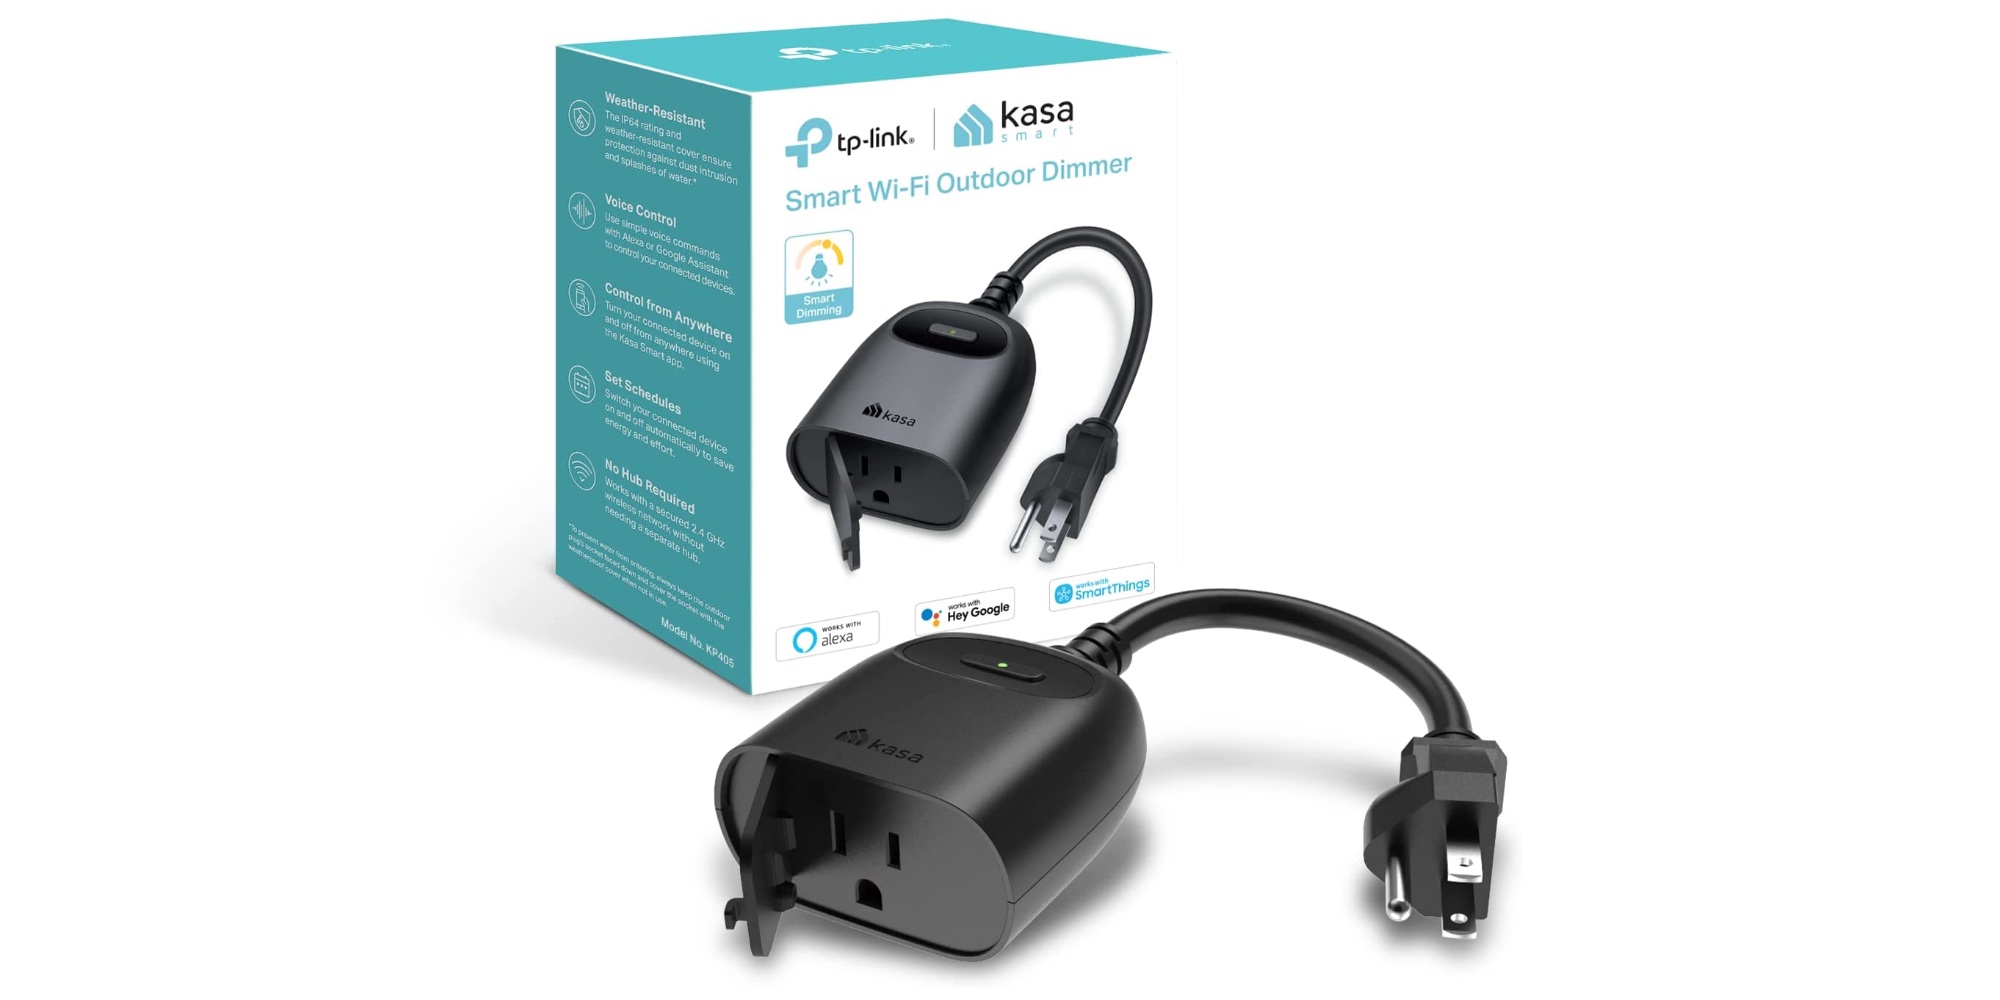 TP-Link Kasa Smart WiFi Plug No Hub Required Works with Alexa Echo